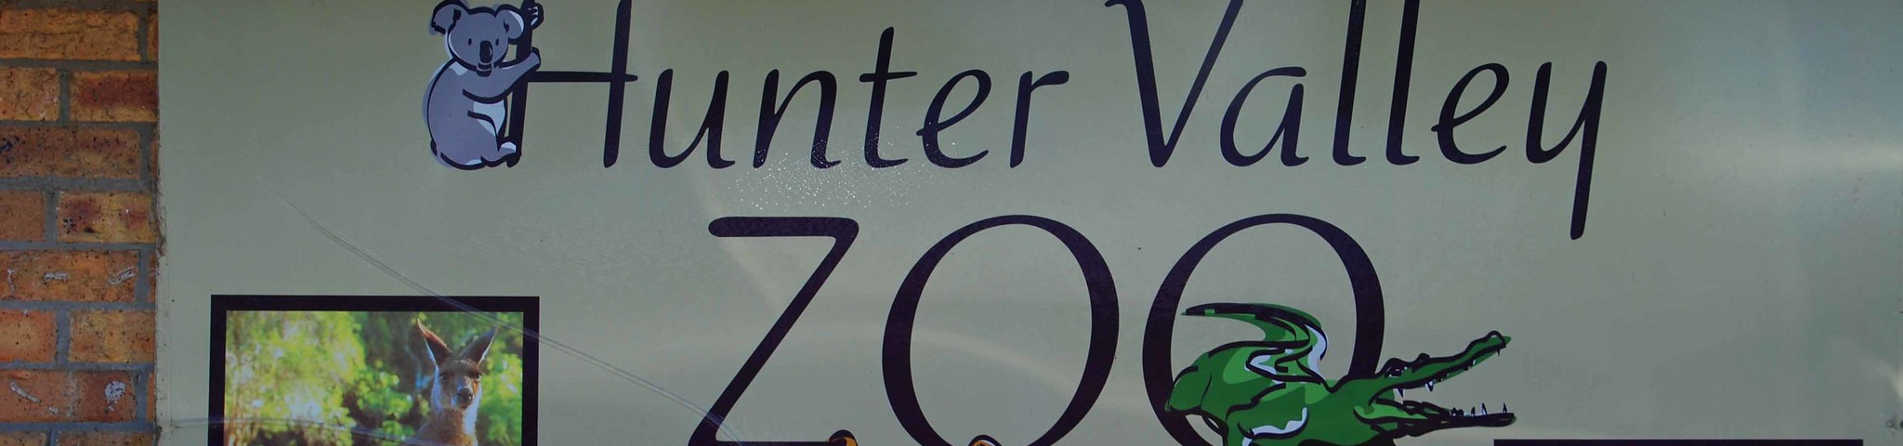 Enjoy the Hunter Valley Zoo